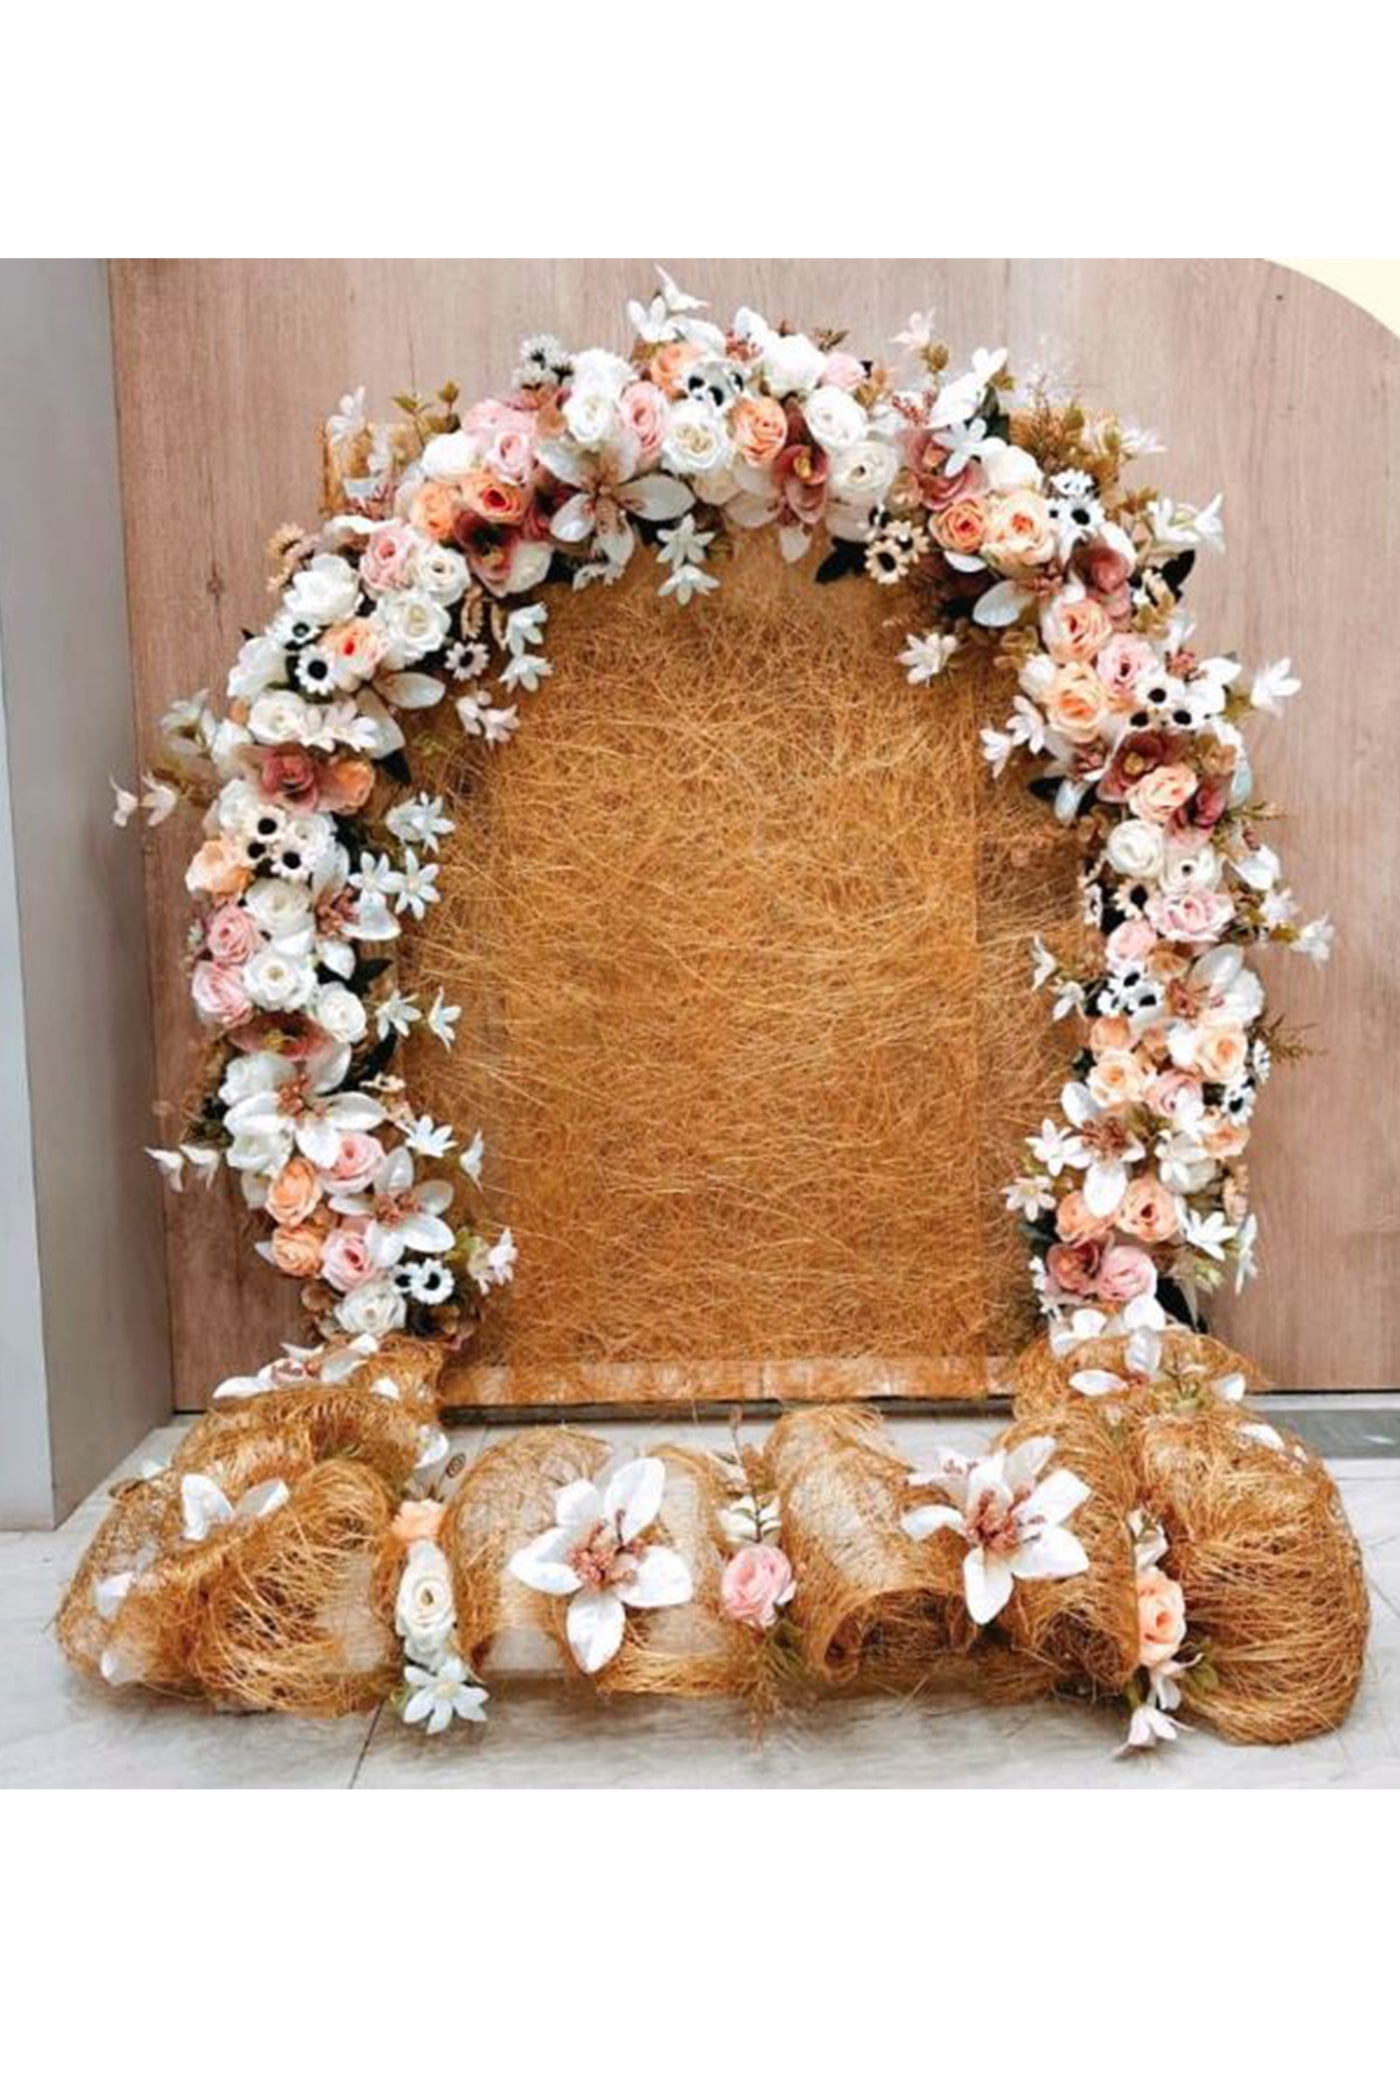 Artificial Flower Design Ganpati Decoration At Home